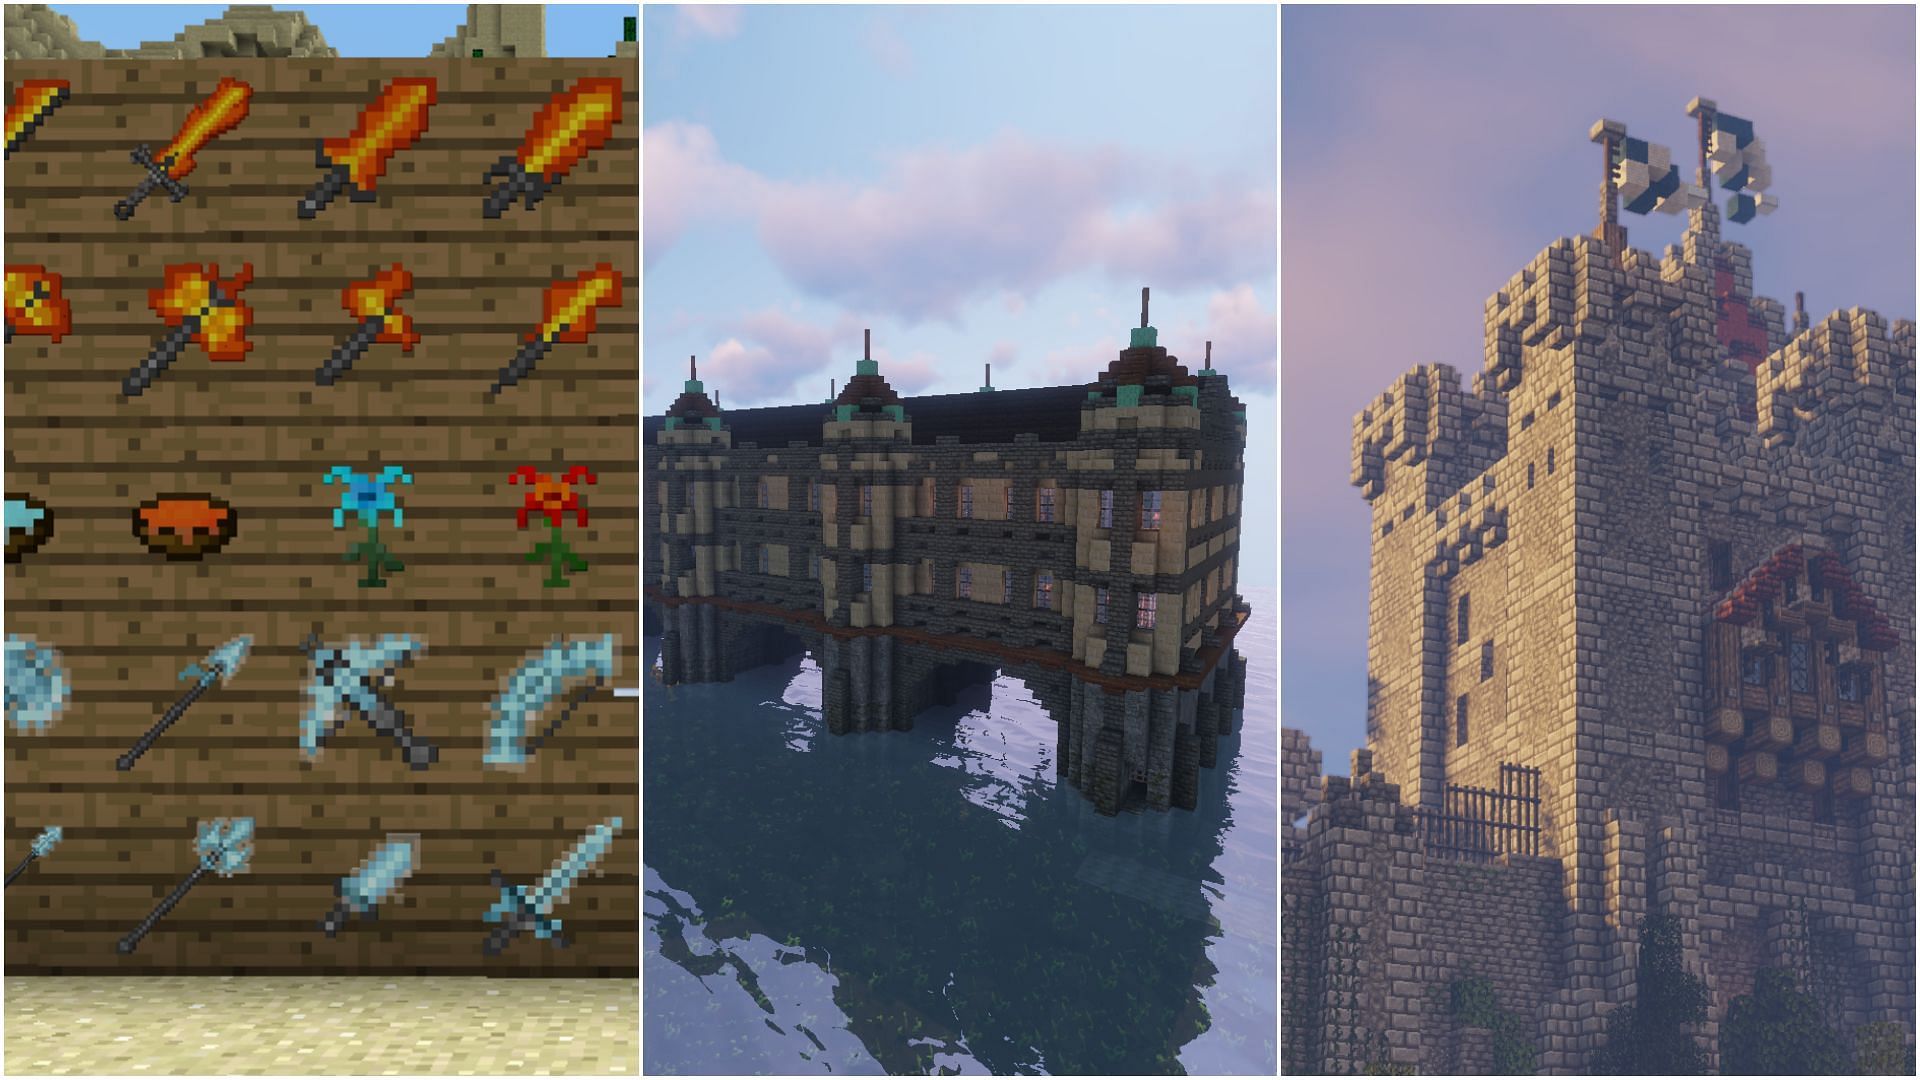 Medieval Fantasy Building Pack 2 Minecraft for Minecraft